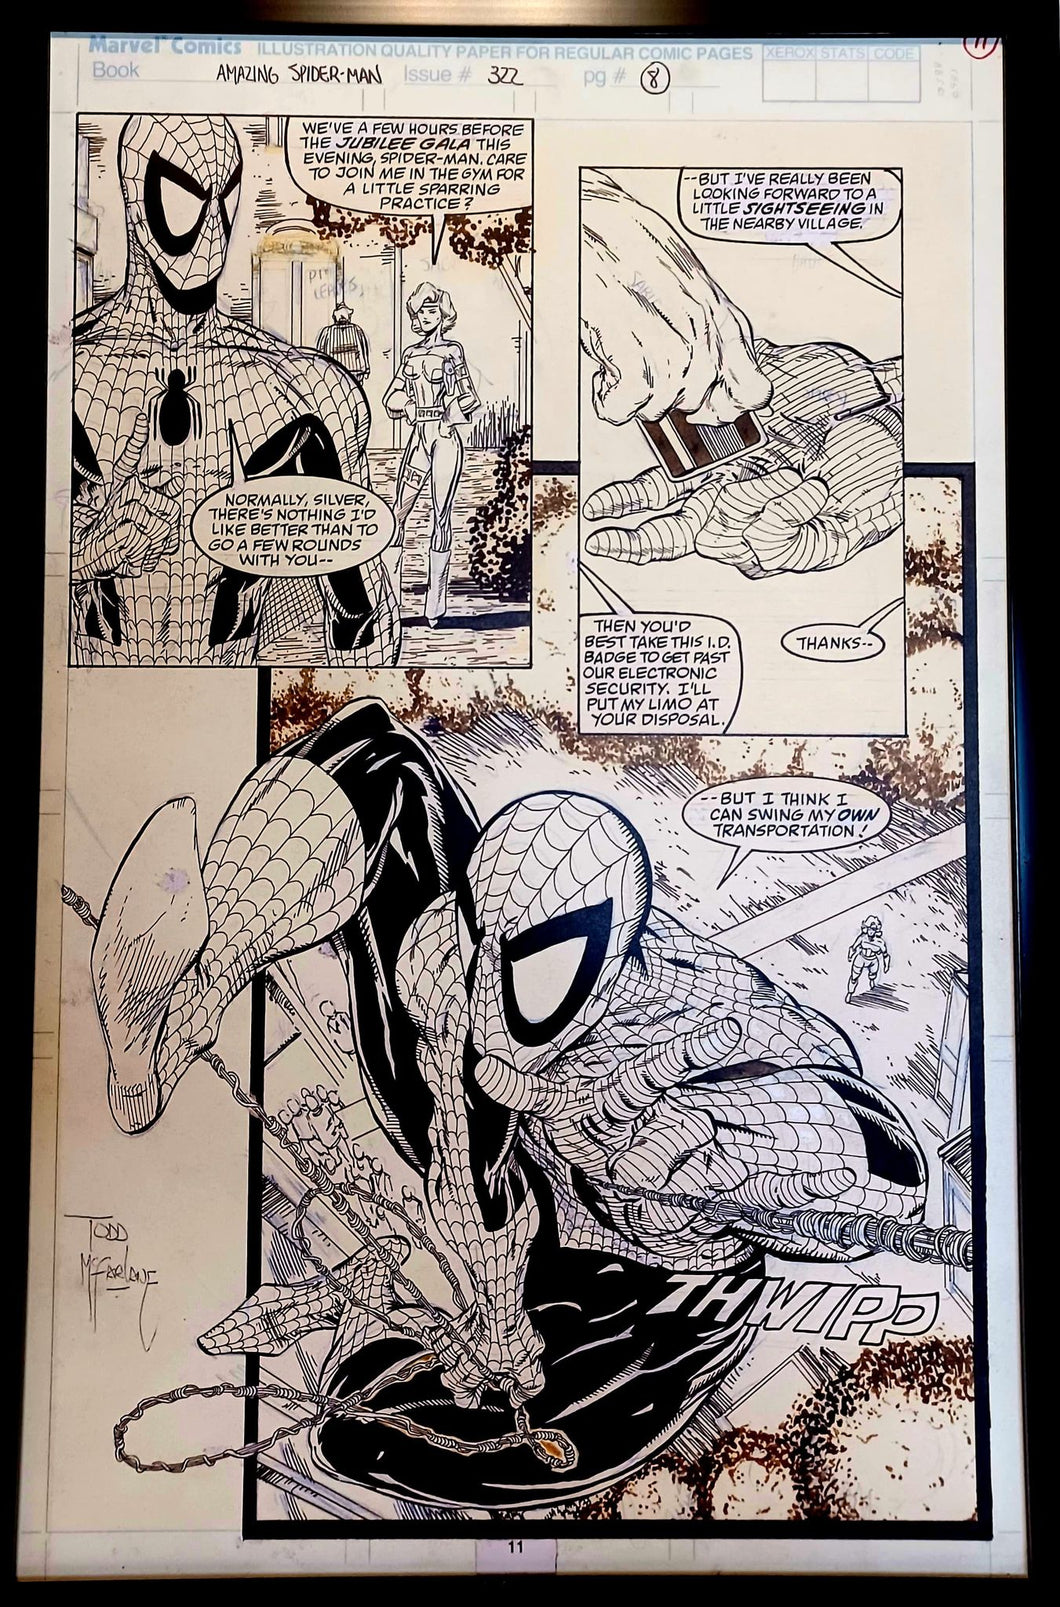 Amazing Spider-Man #322 pg. 8 by Todd McFarlane 11x17 FRAMED Original Art Print Comic Poster